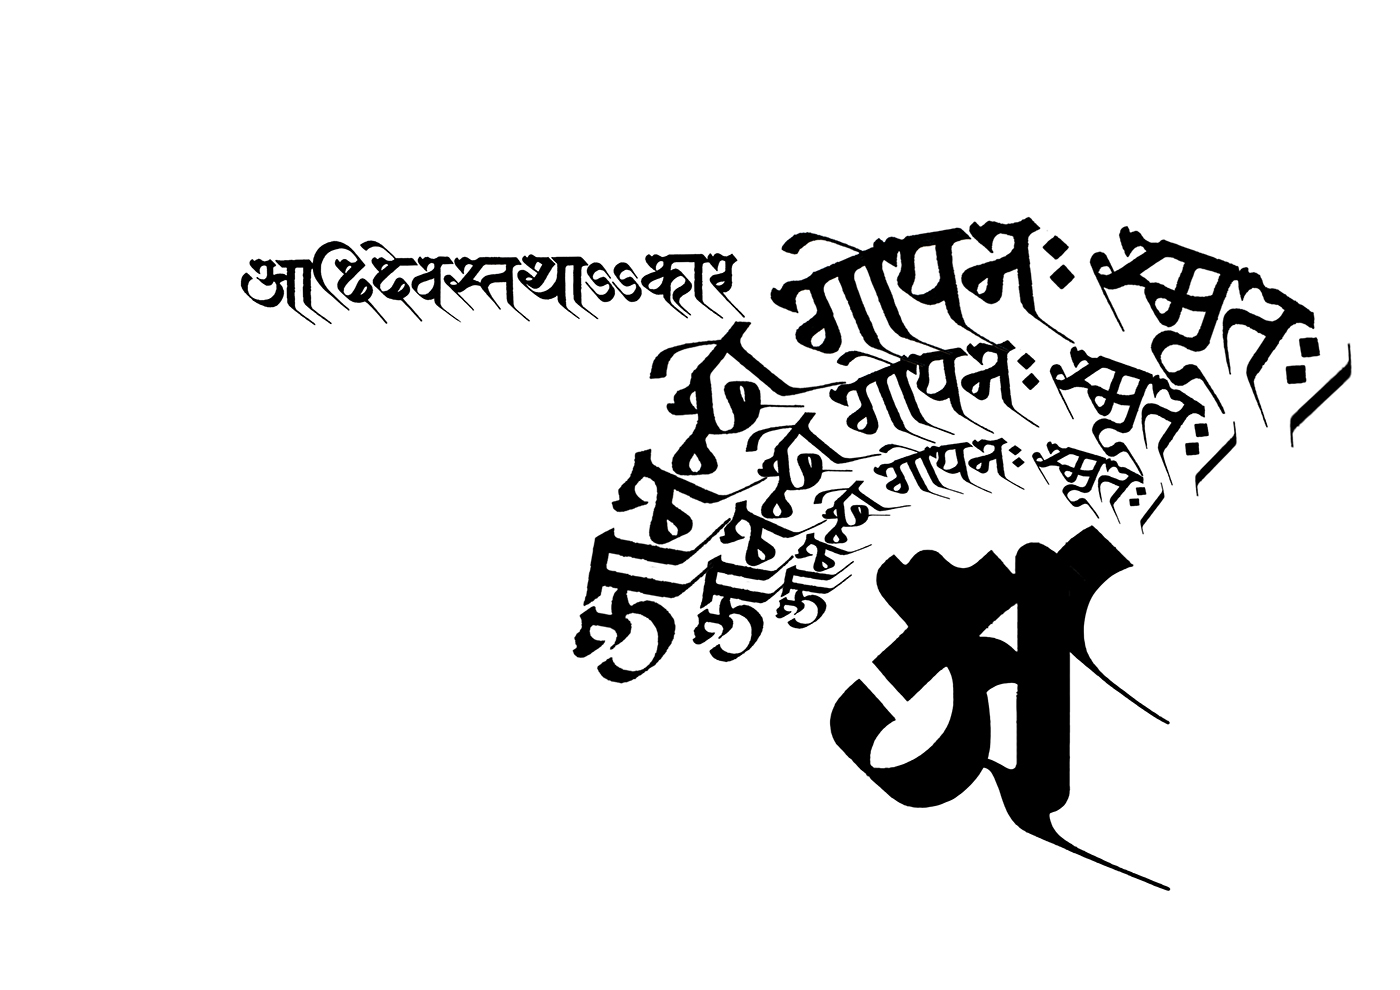 Siddham Script devanagari calligraphy calligraphic experiment exploration Stylization